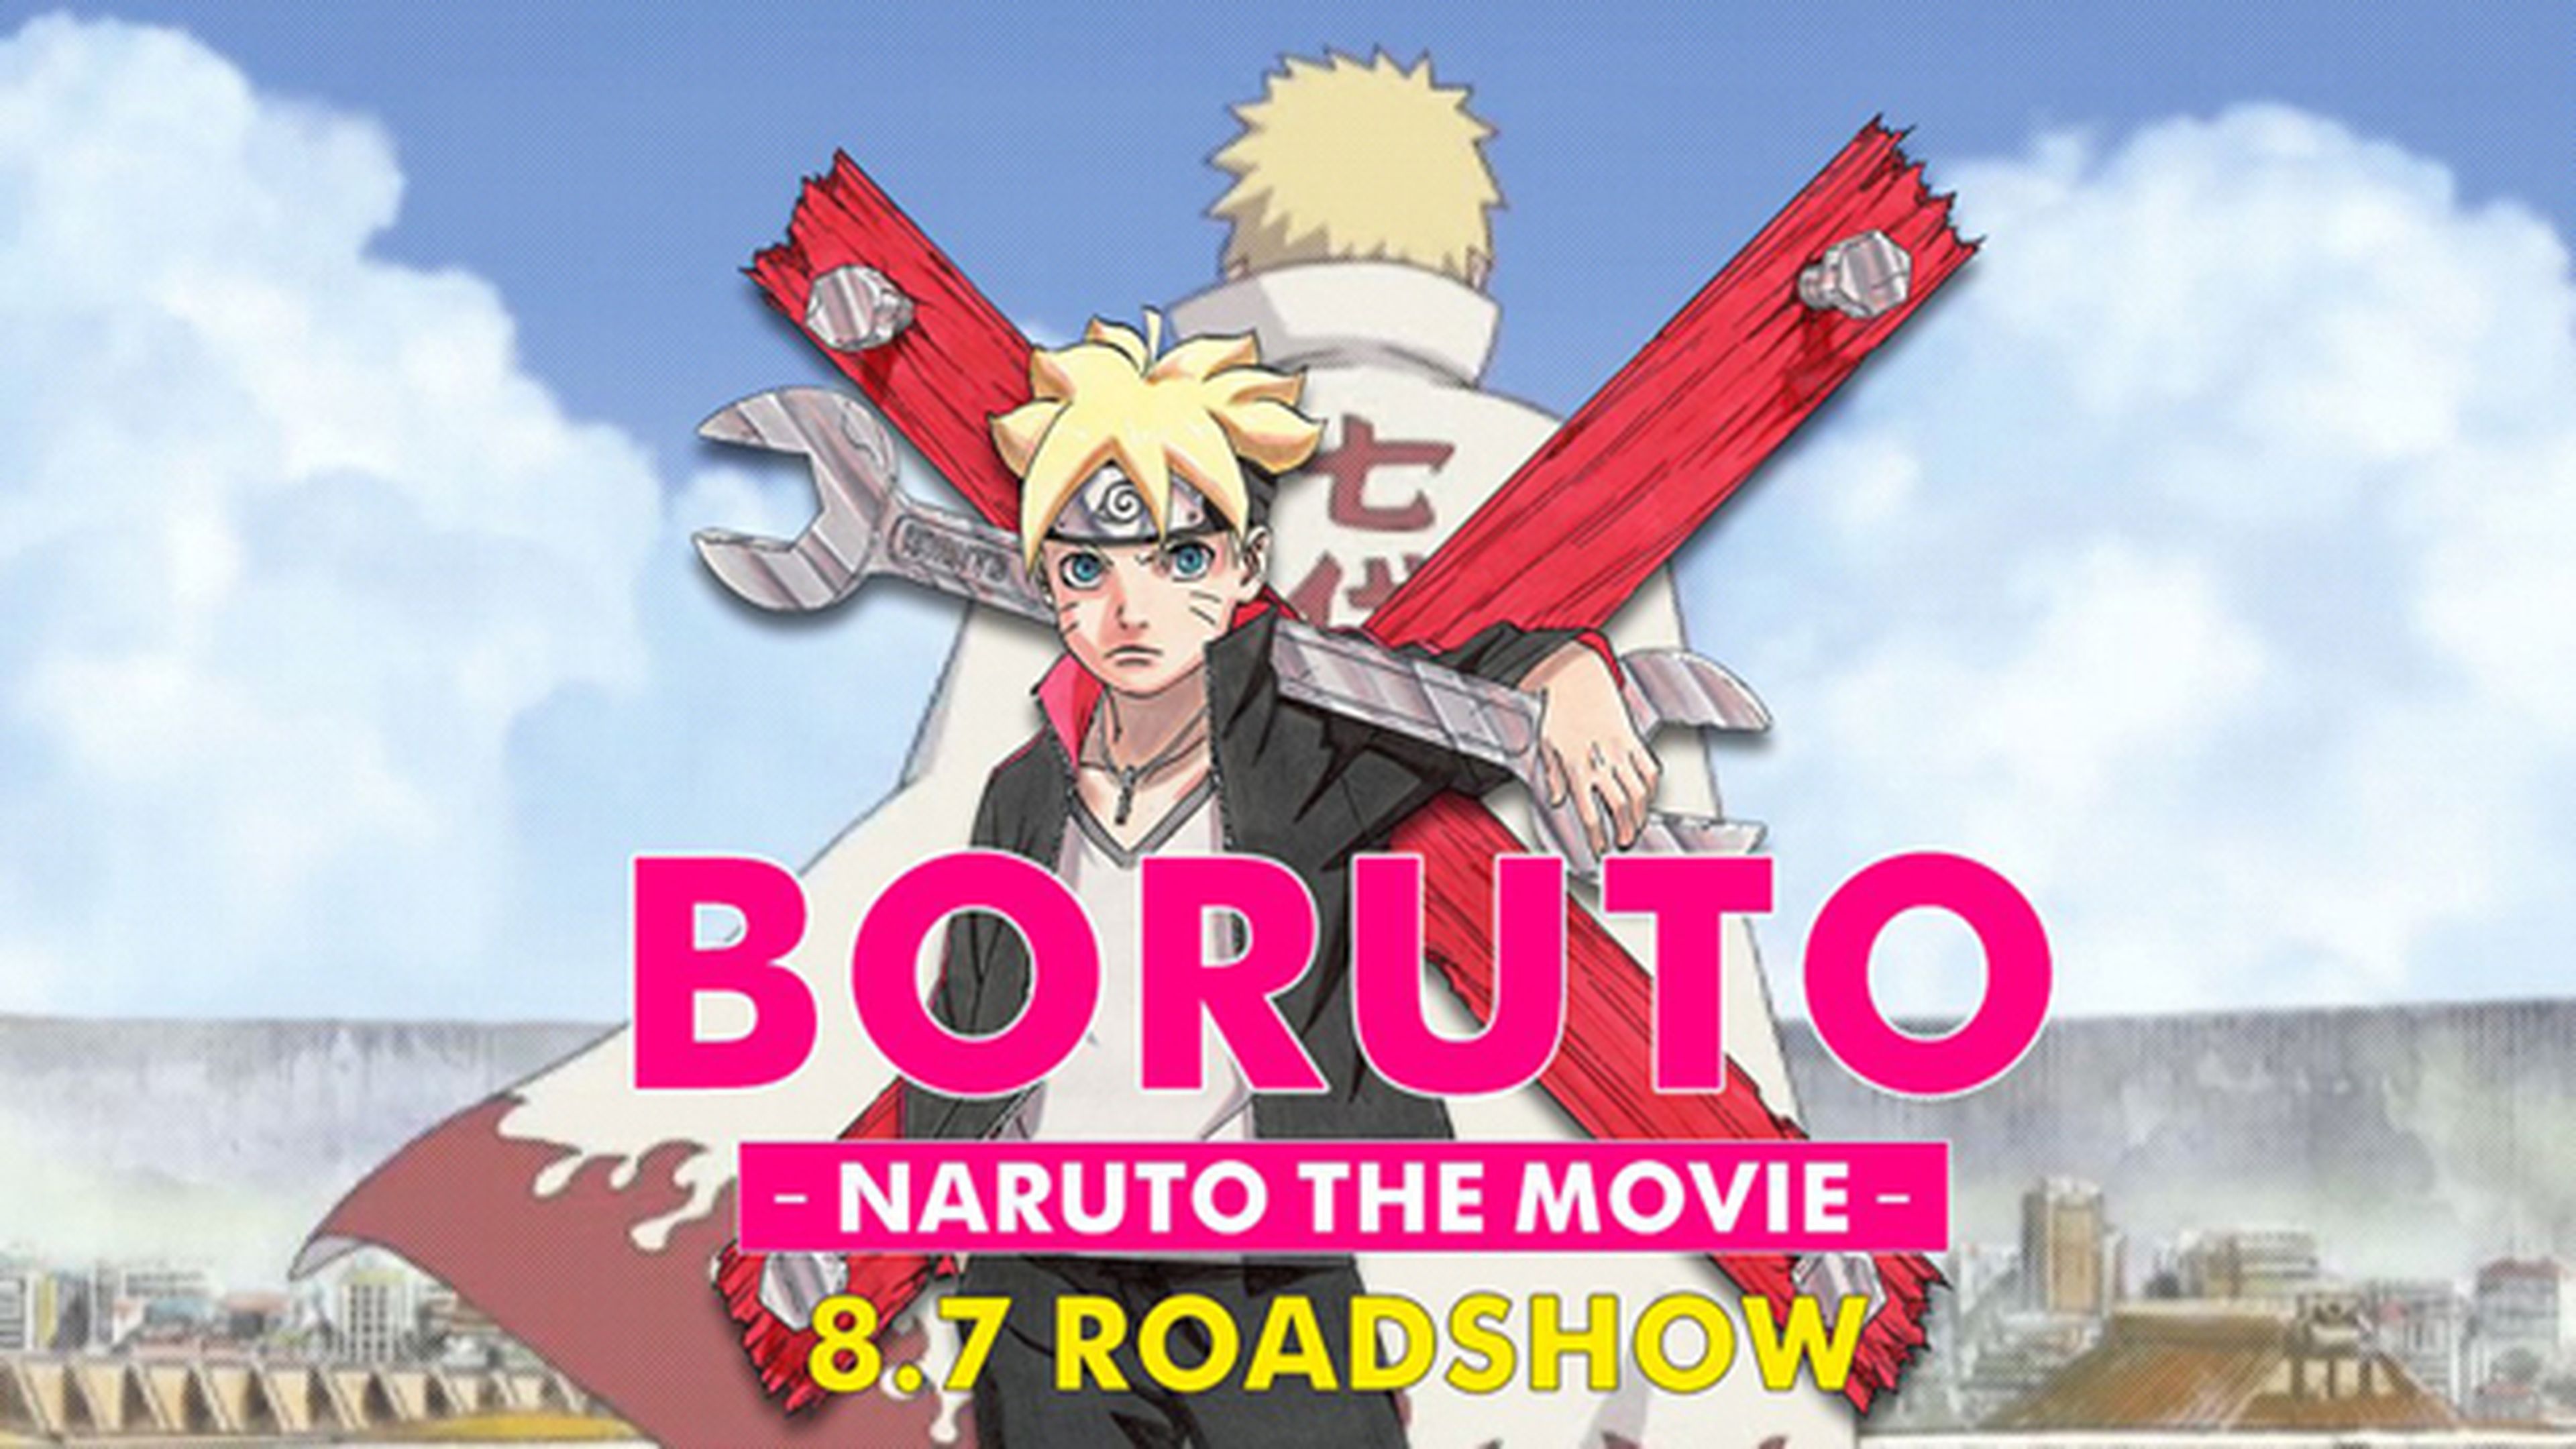 Boruto -Naruto the Movie- ya tiene trama (spoilers)